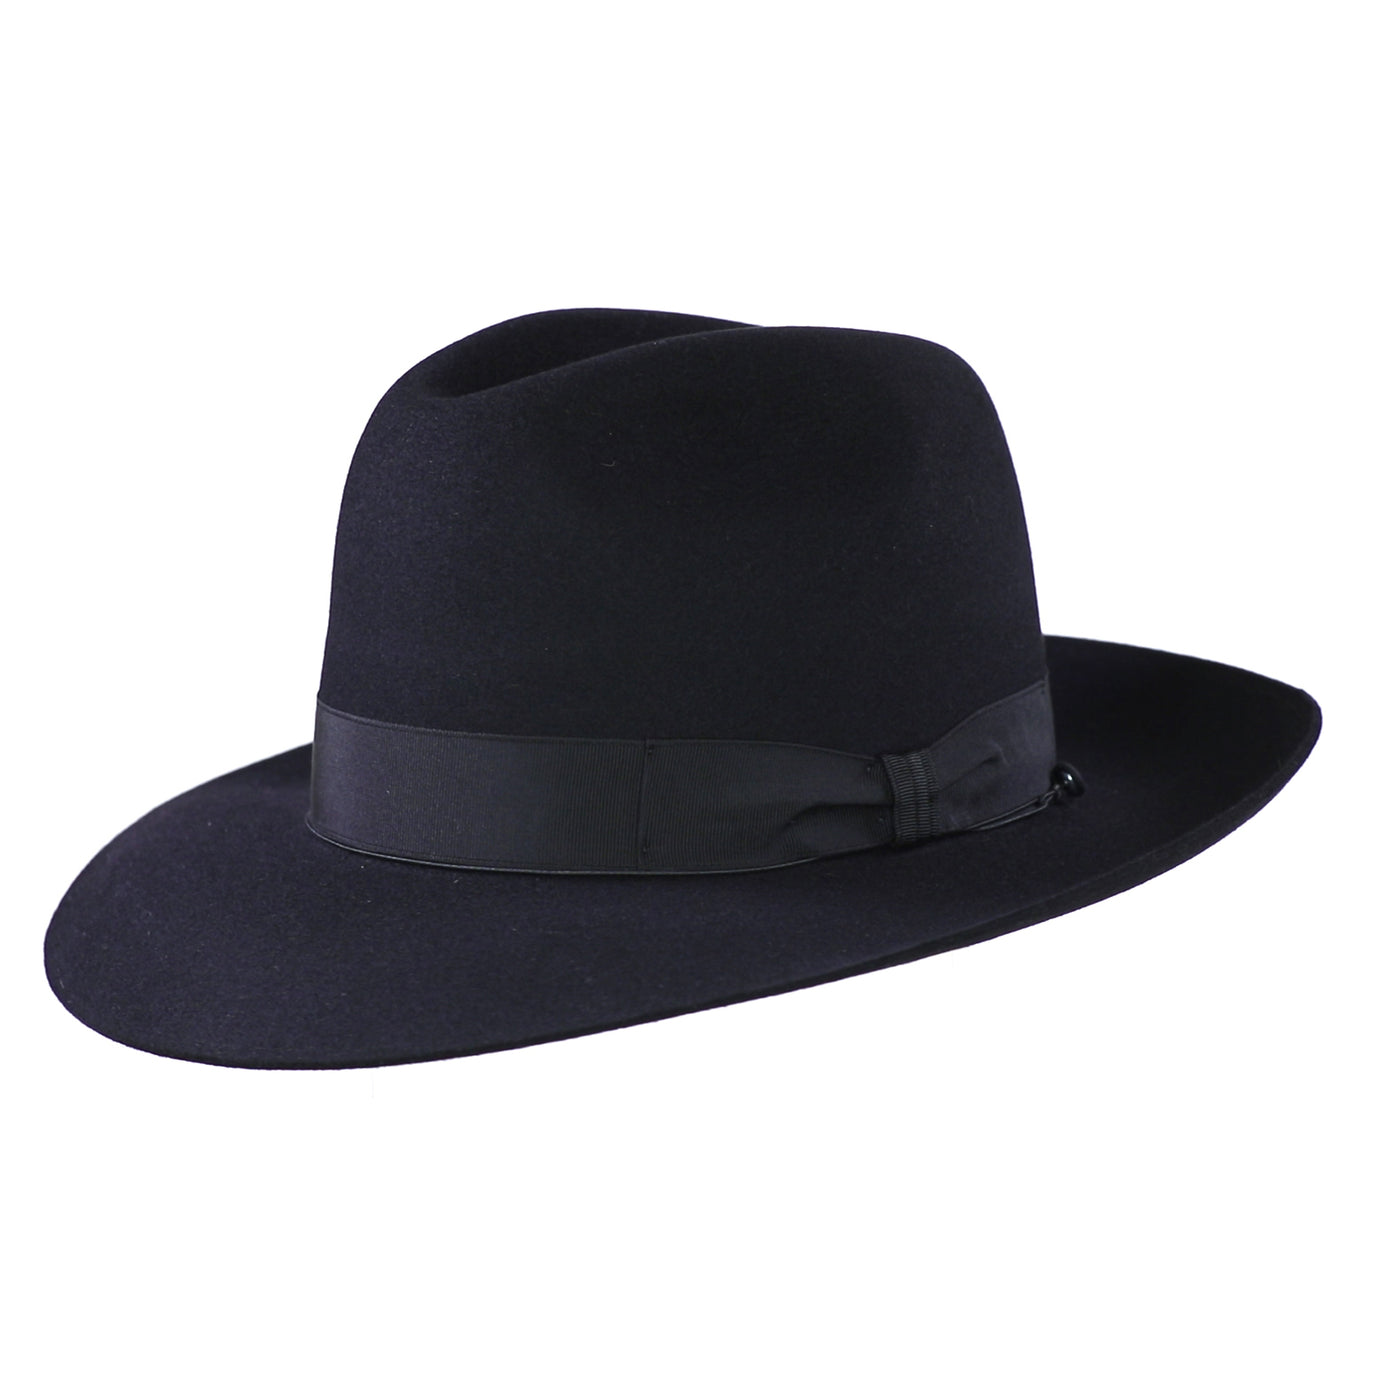 Angelo 300, product_type] - Borsalino for Atica fedora hat